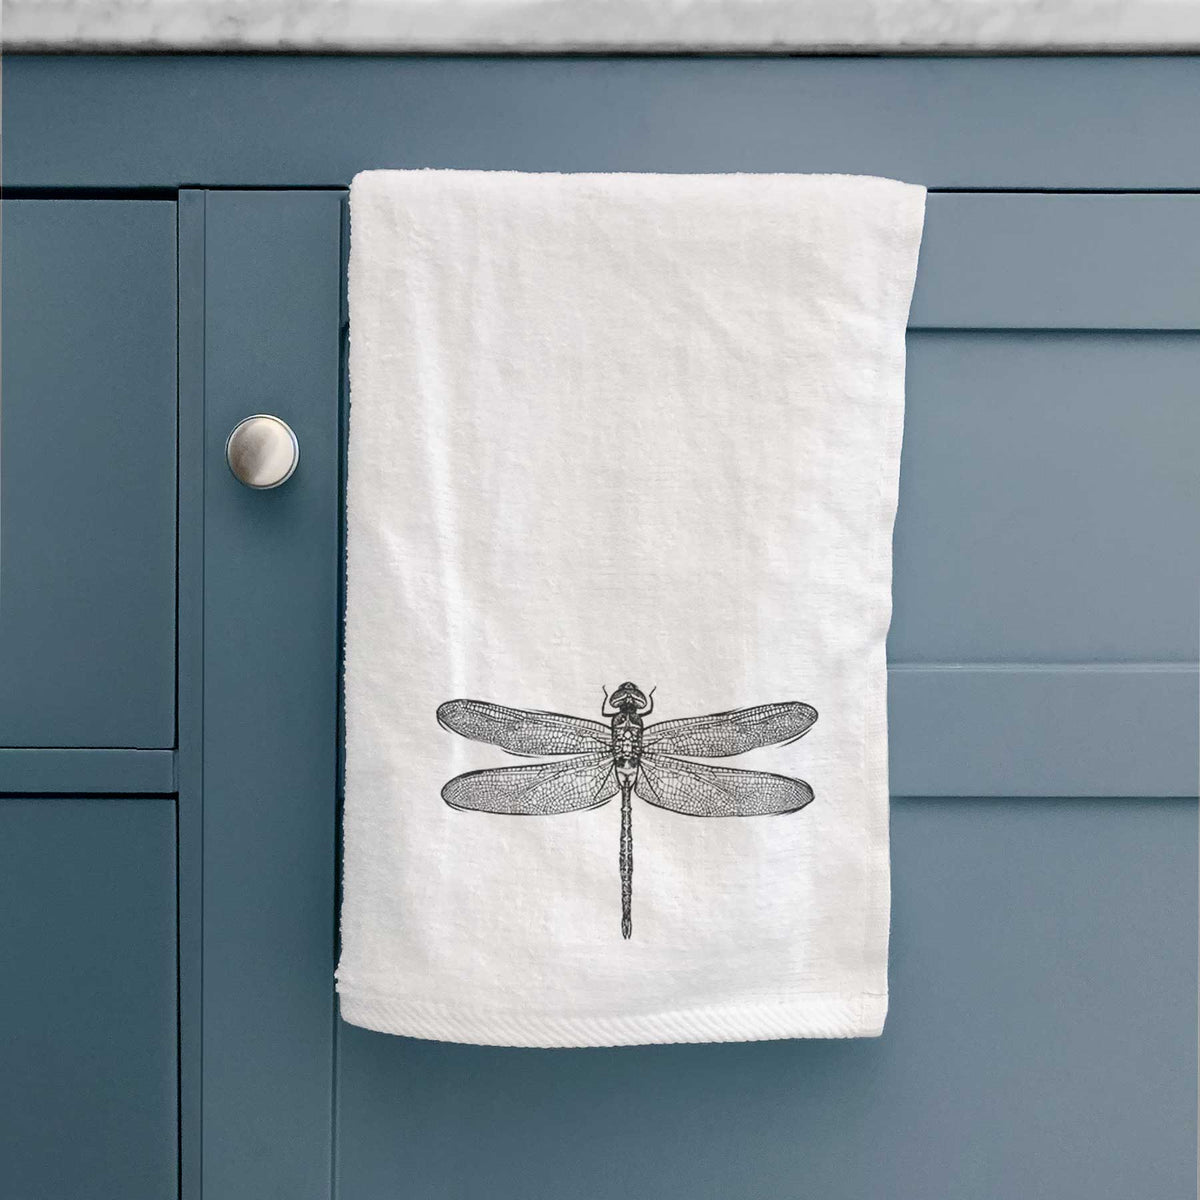 Anax Junius - Green Darner Dragonfly Hand Towel